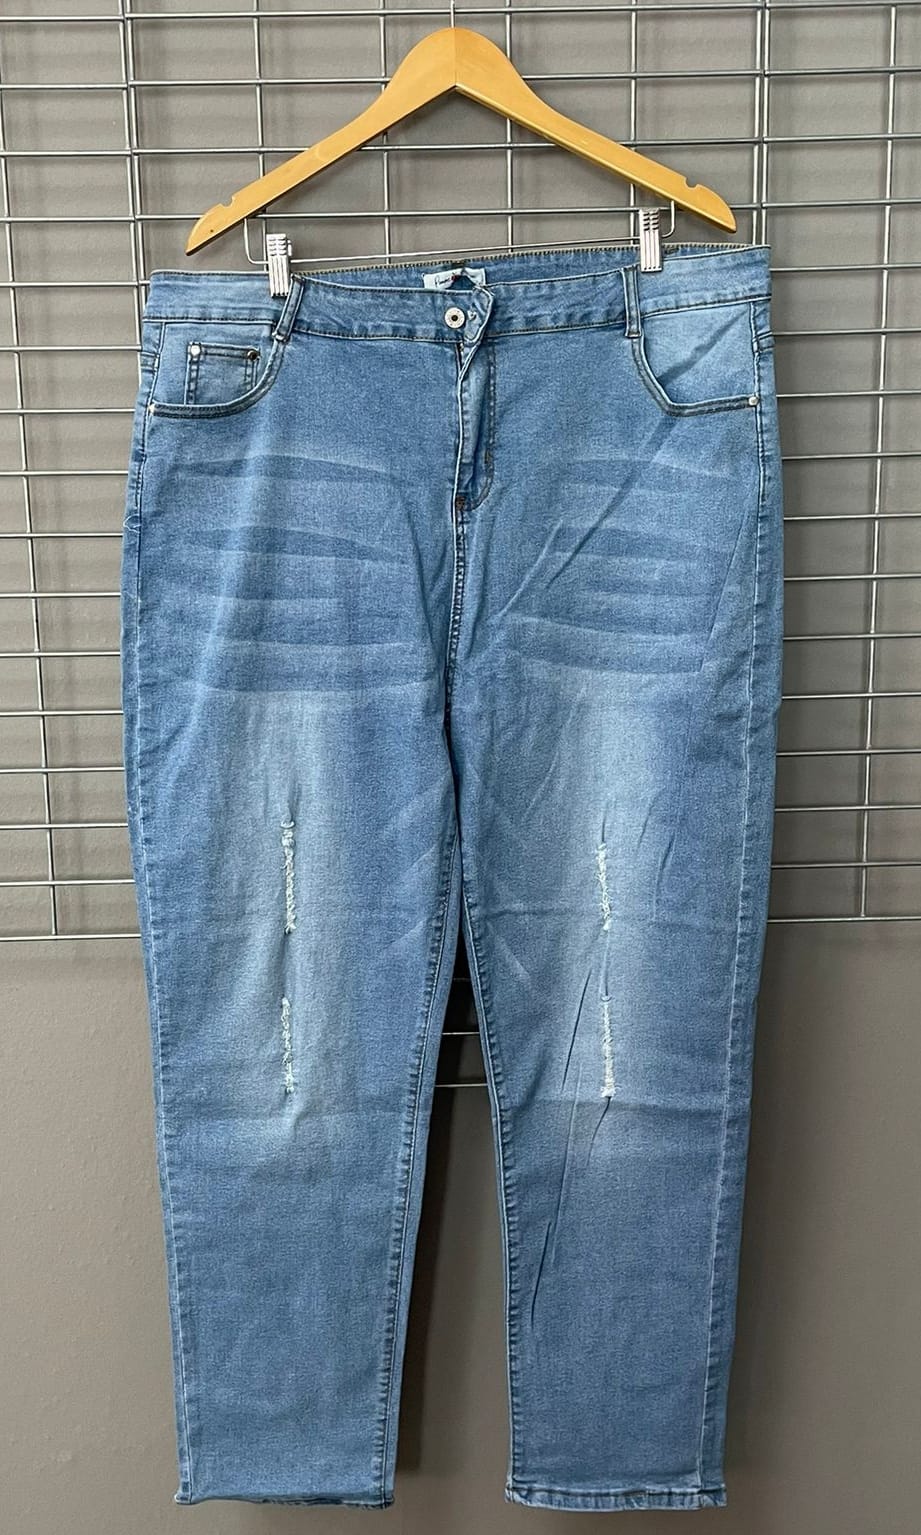 Gr. 48 - 54 Jeans Hose mit Stretch